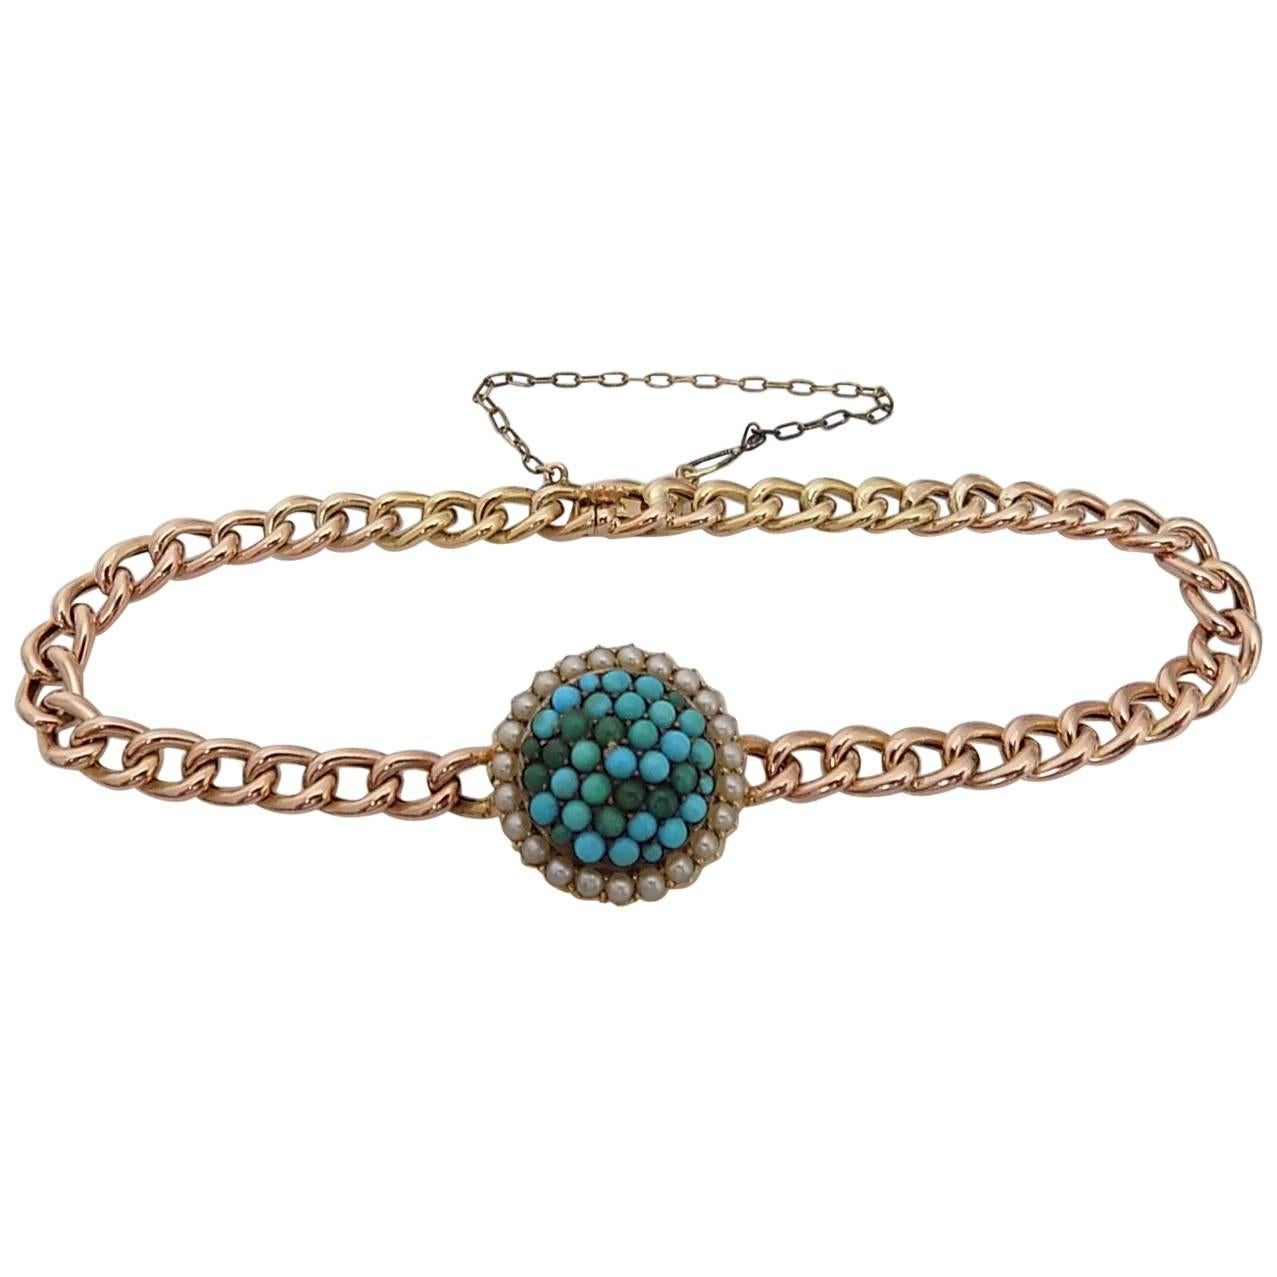 15 Karat viktorianisches Türkis-Perlen-Gold-Armband